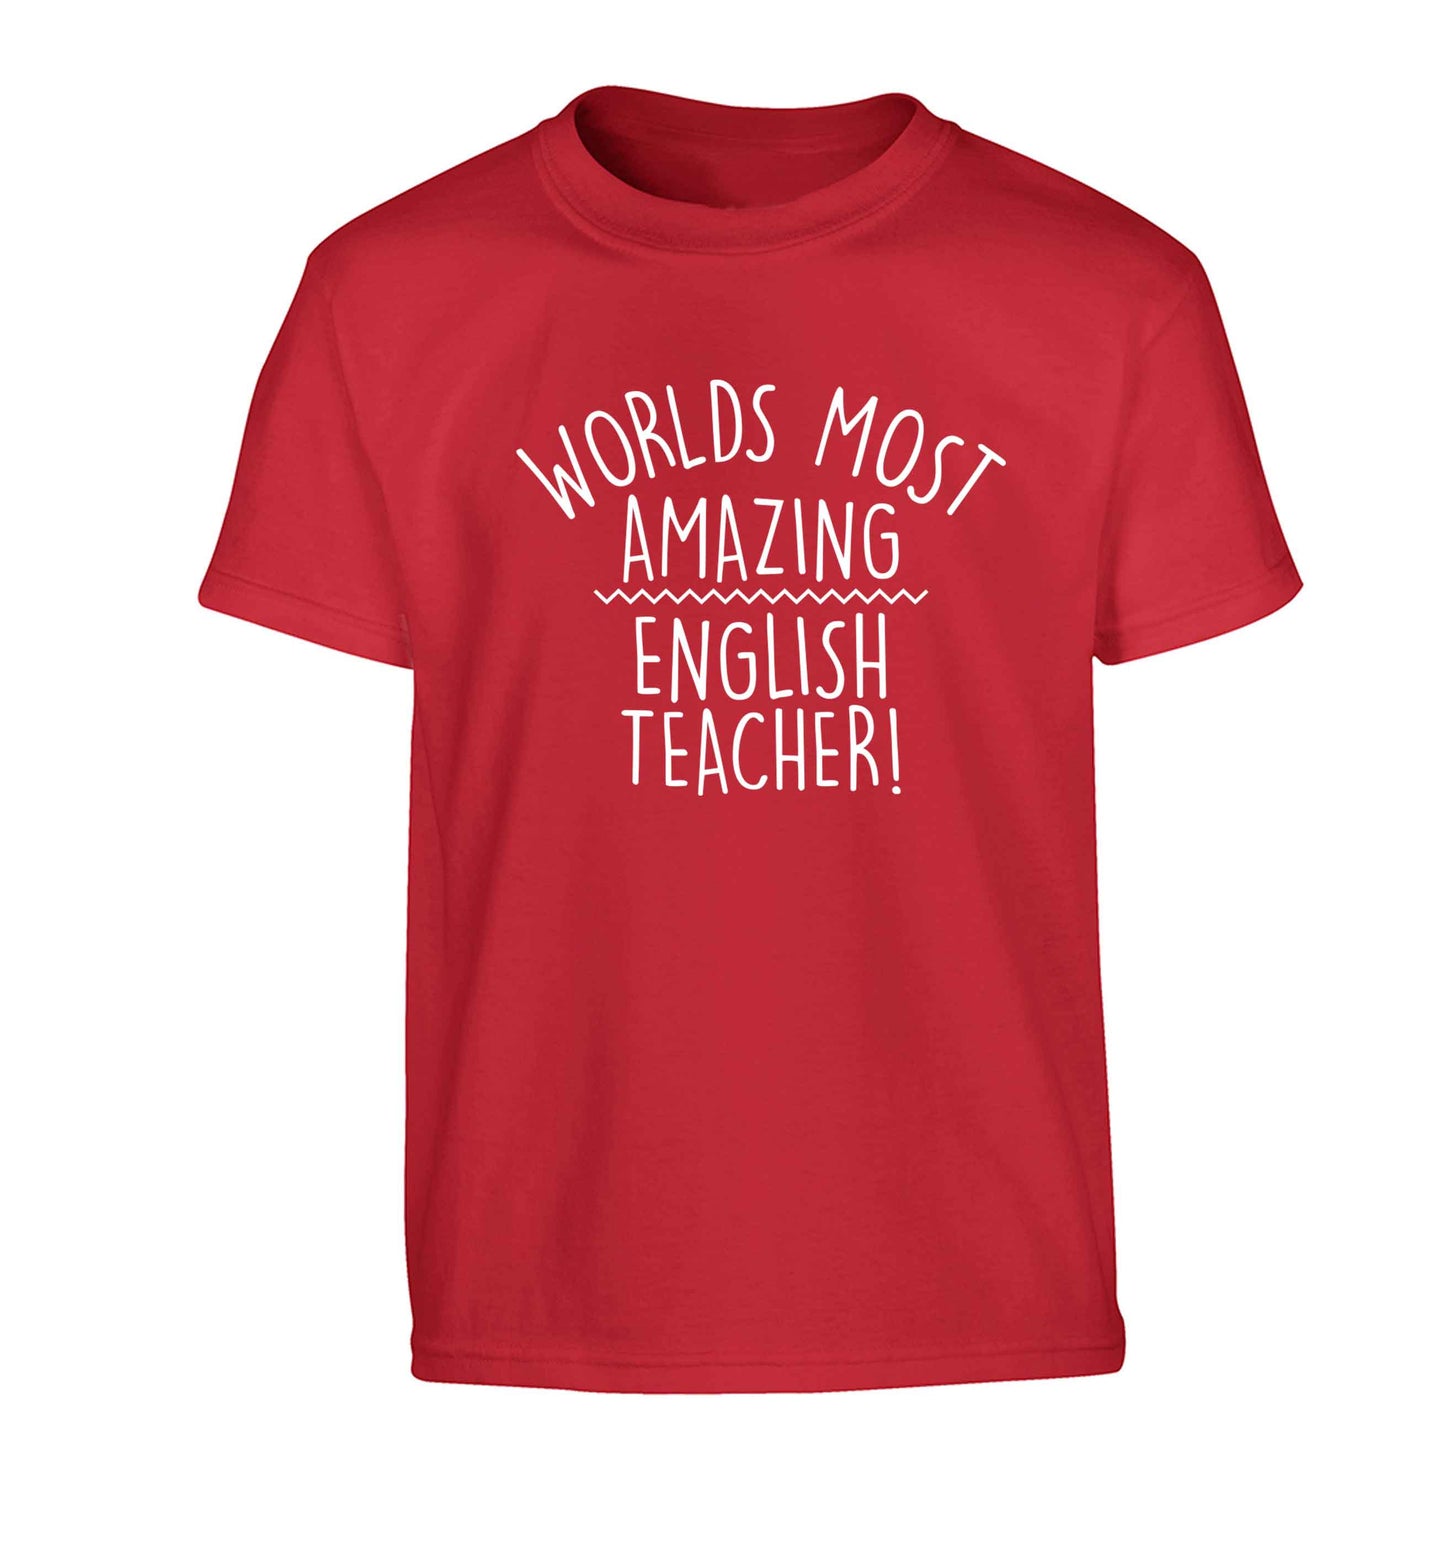 Worlds most amazing English teacher Children's red Tshirt 12-13 Years